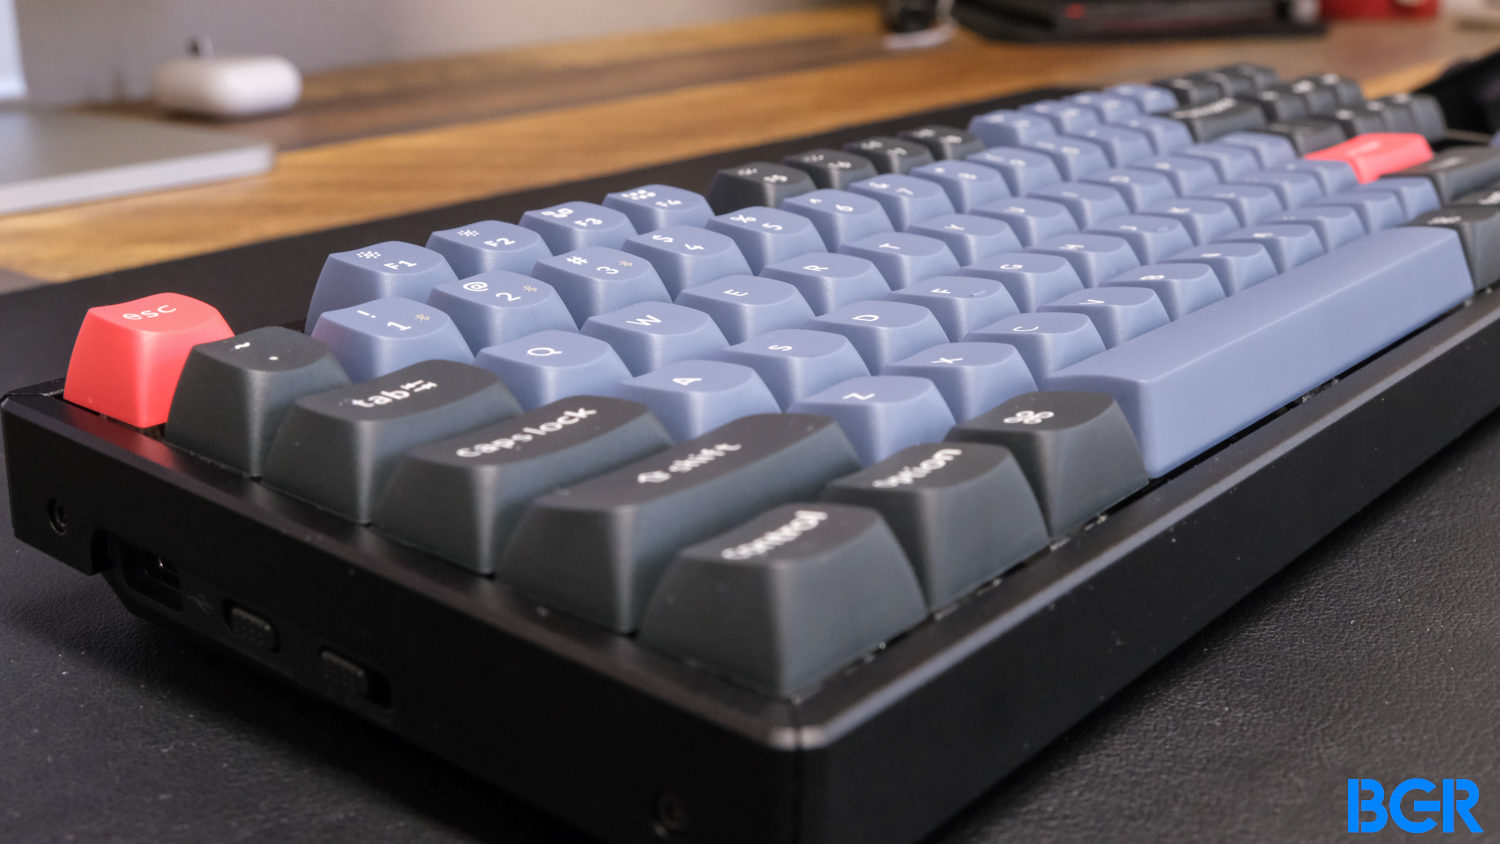 Keychron K8 Pro mechanical keyboard review